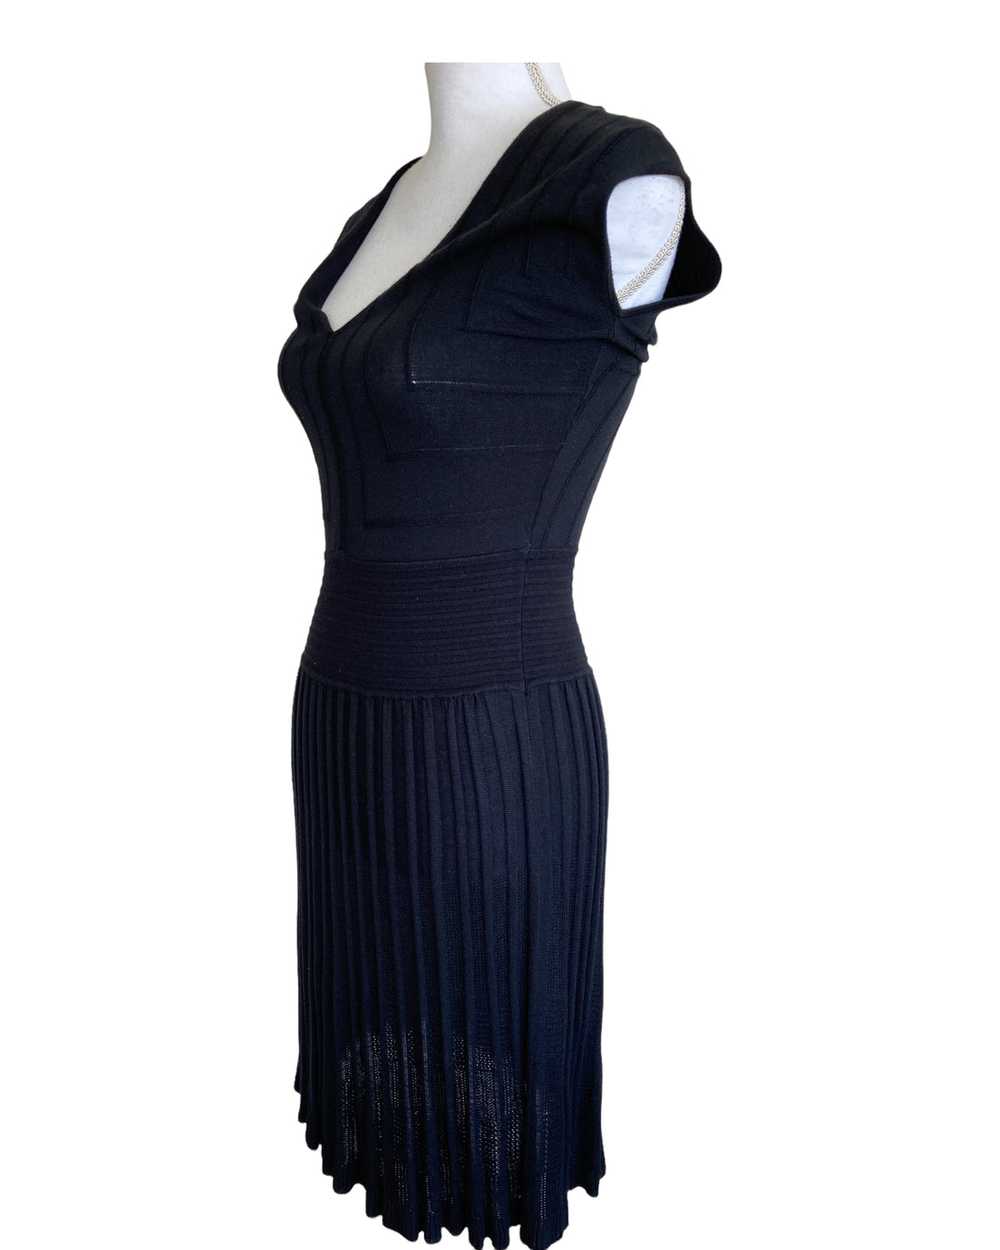 Max Studio Black Stretch Cap Sleeve Dress, S - image 4